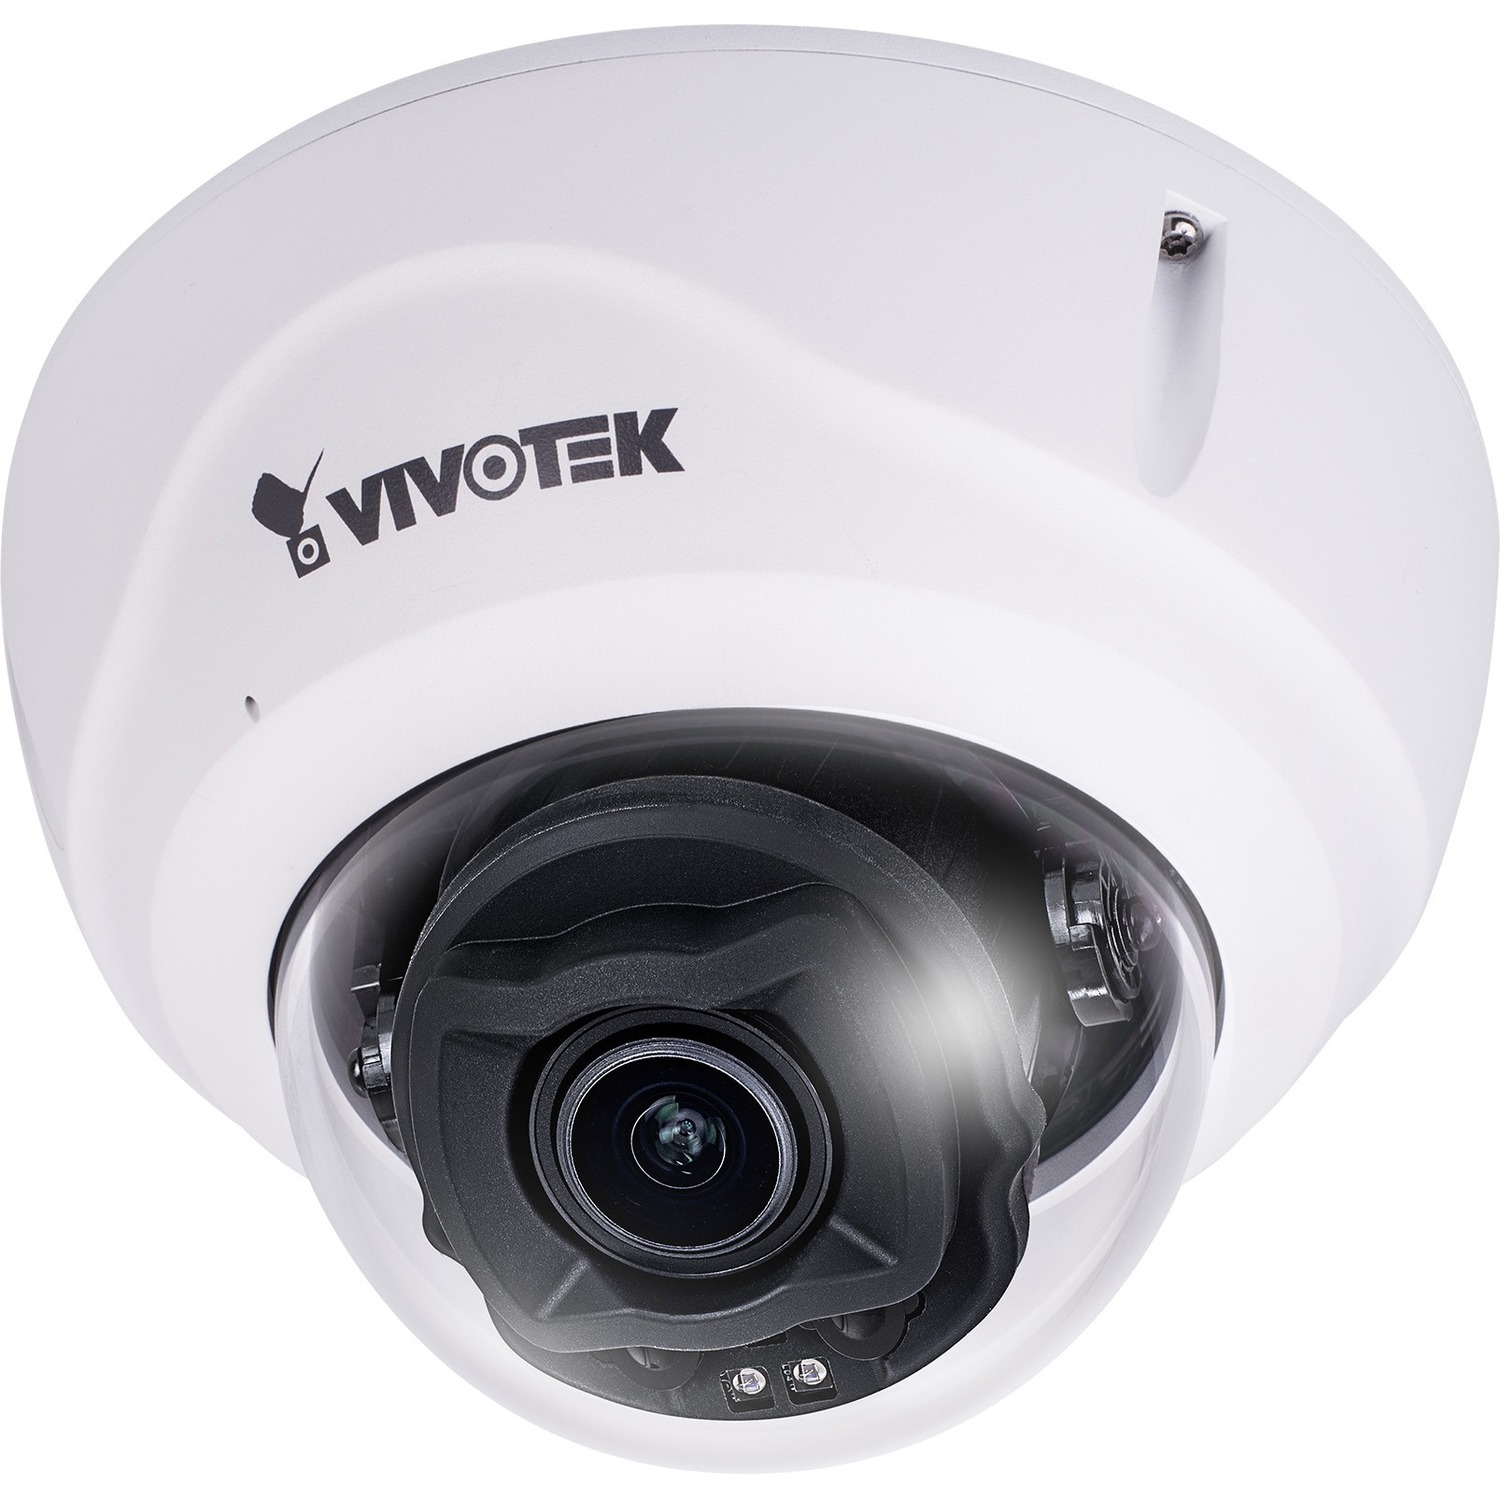 Vivotek FD9387-HTV-A 5 Megapixel Outdoor HD Network Camera - Monochrome, Color - - Picture 1 of 1